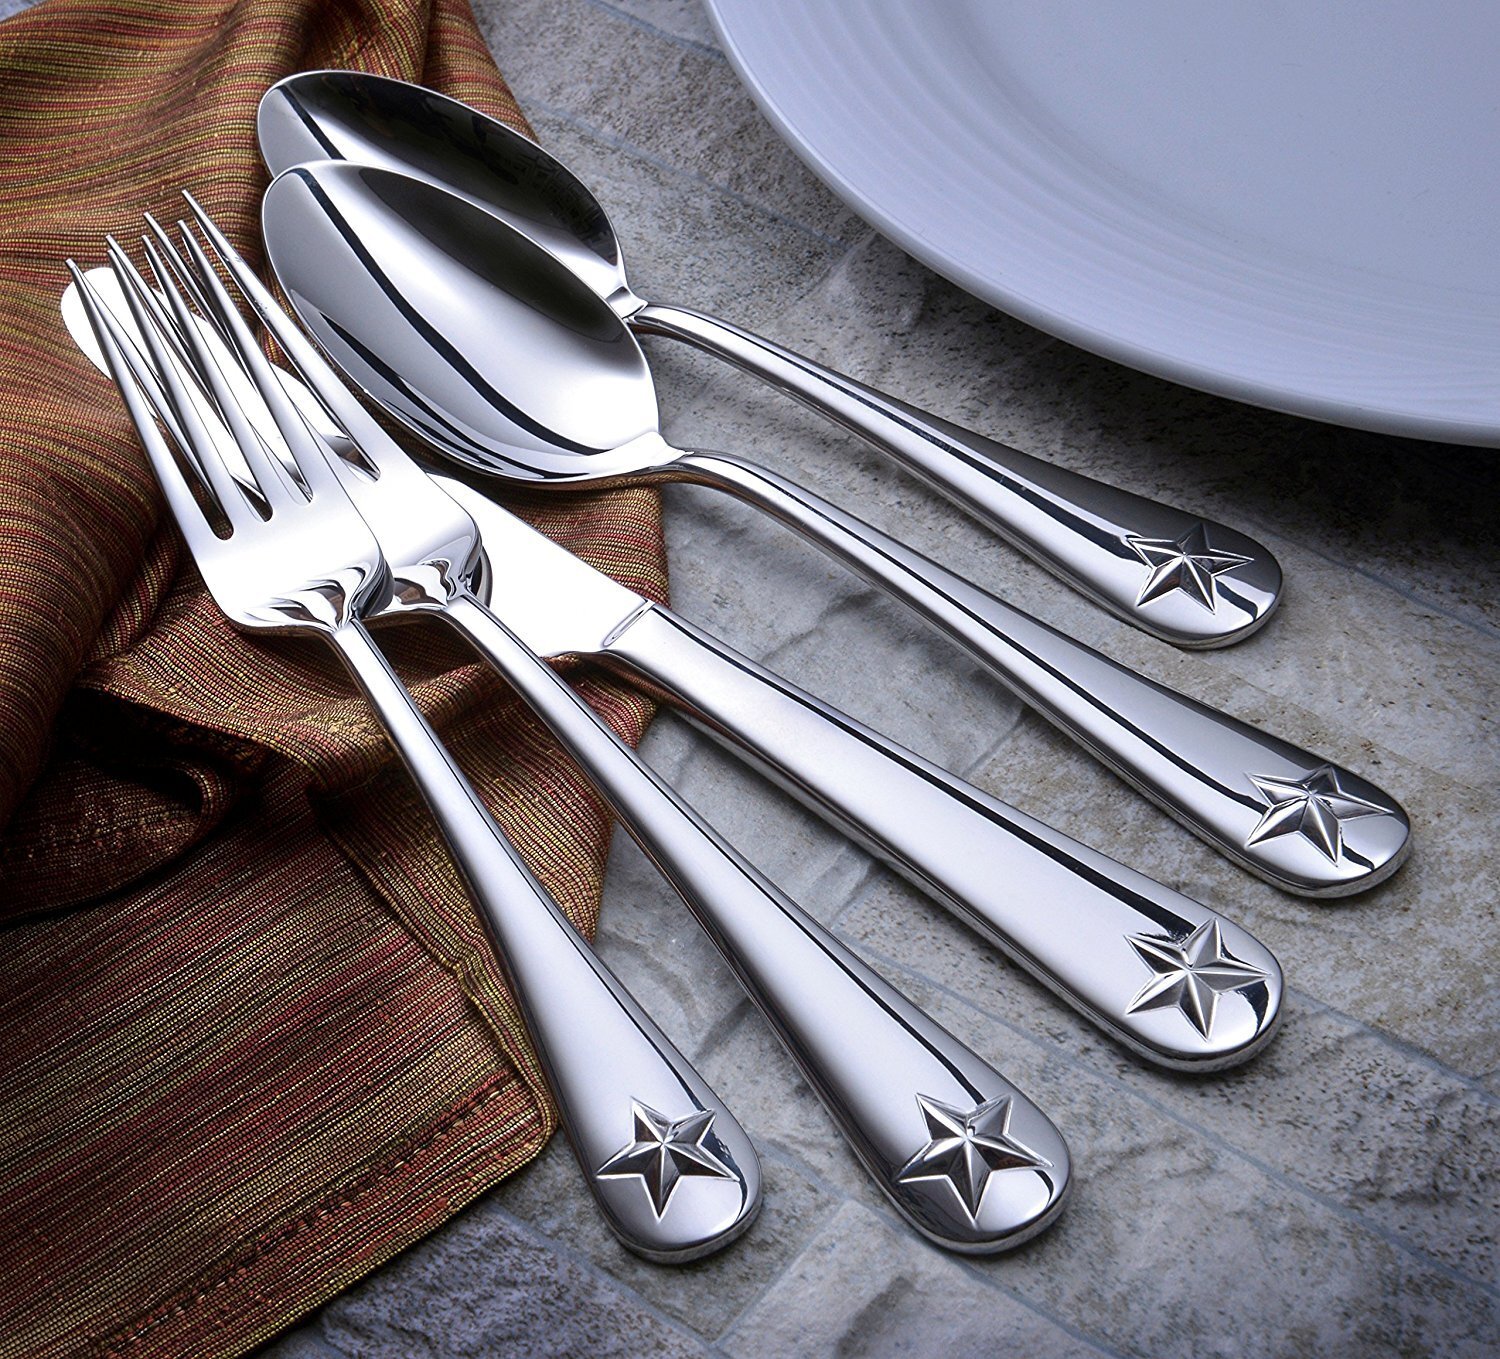 NEW!- Rada Cutlery: Alex's Favorites 8 piece Cutlery Set